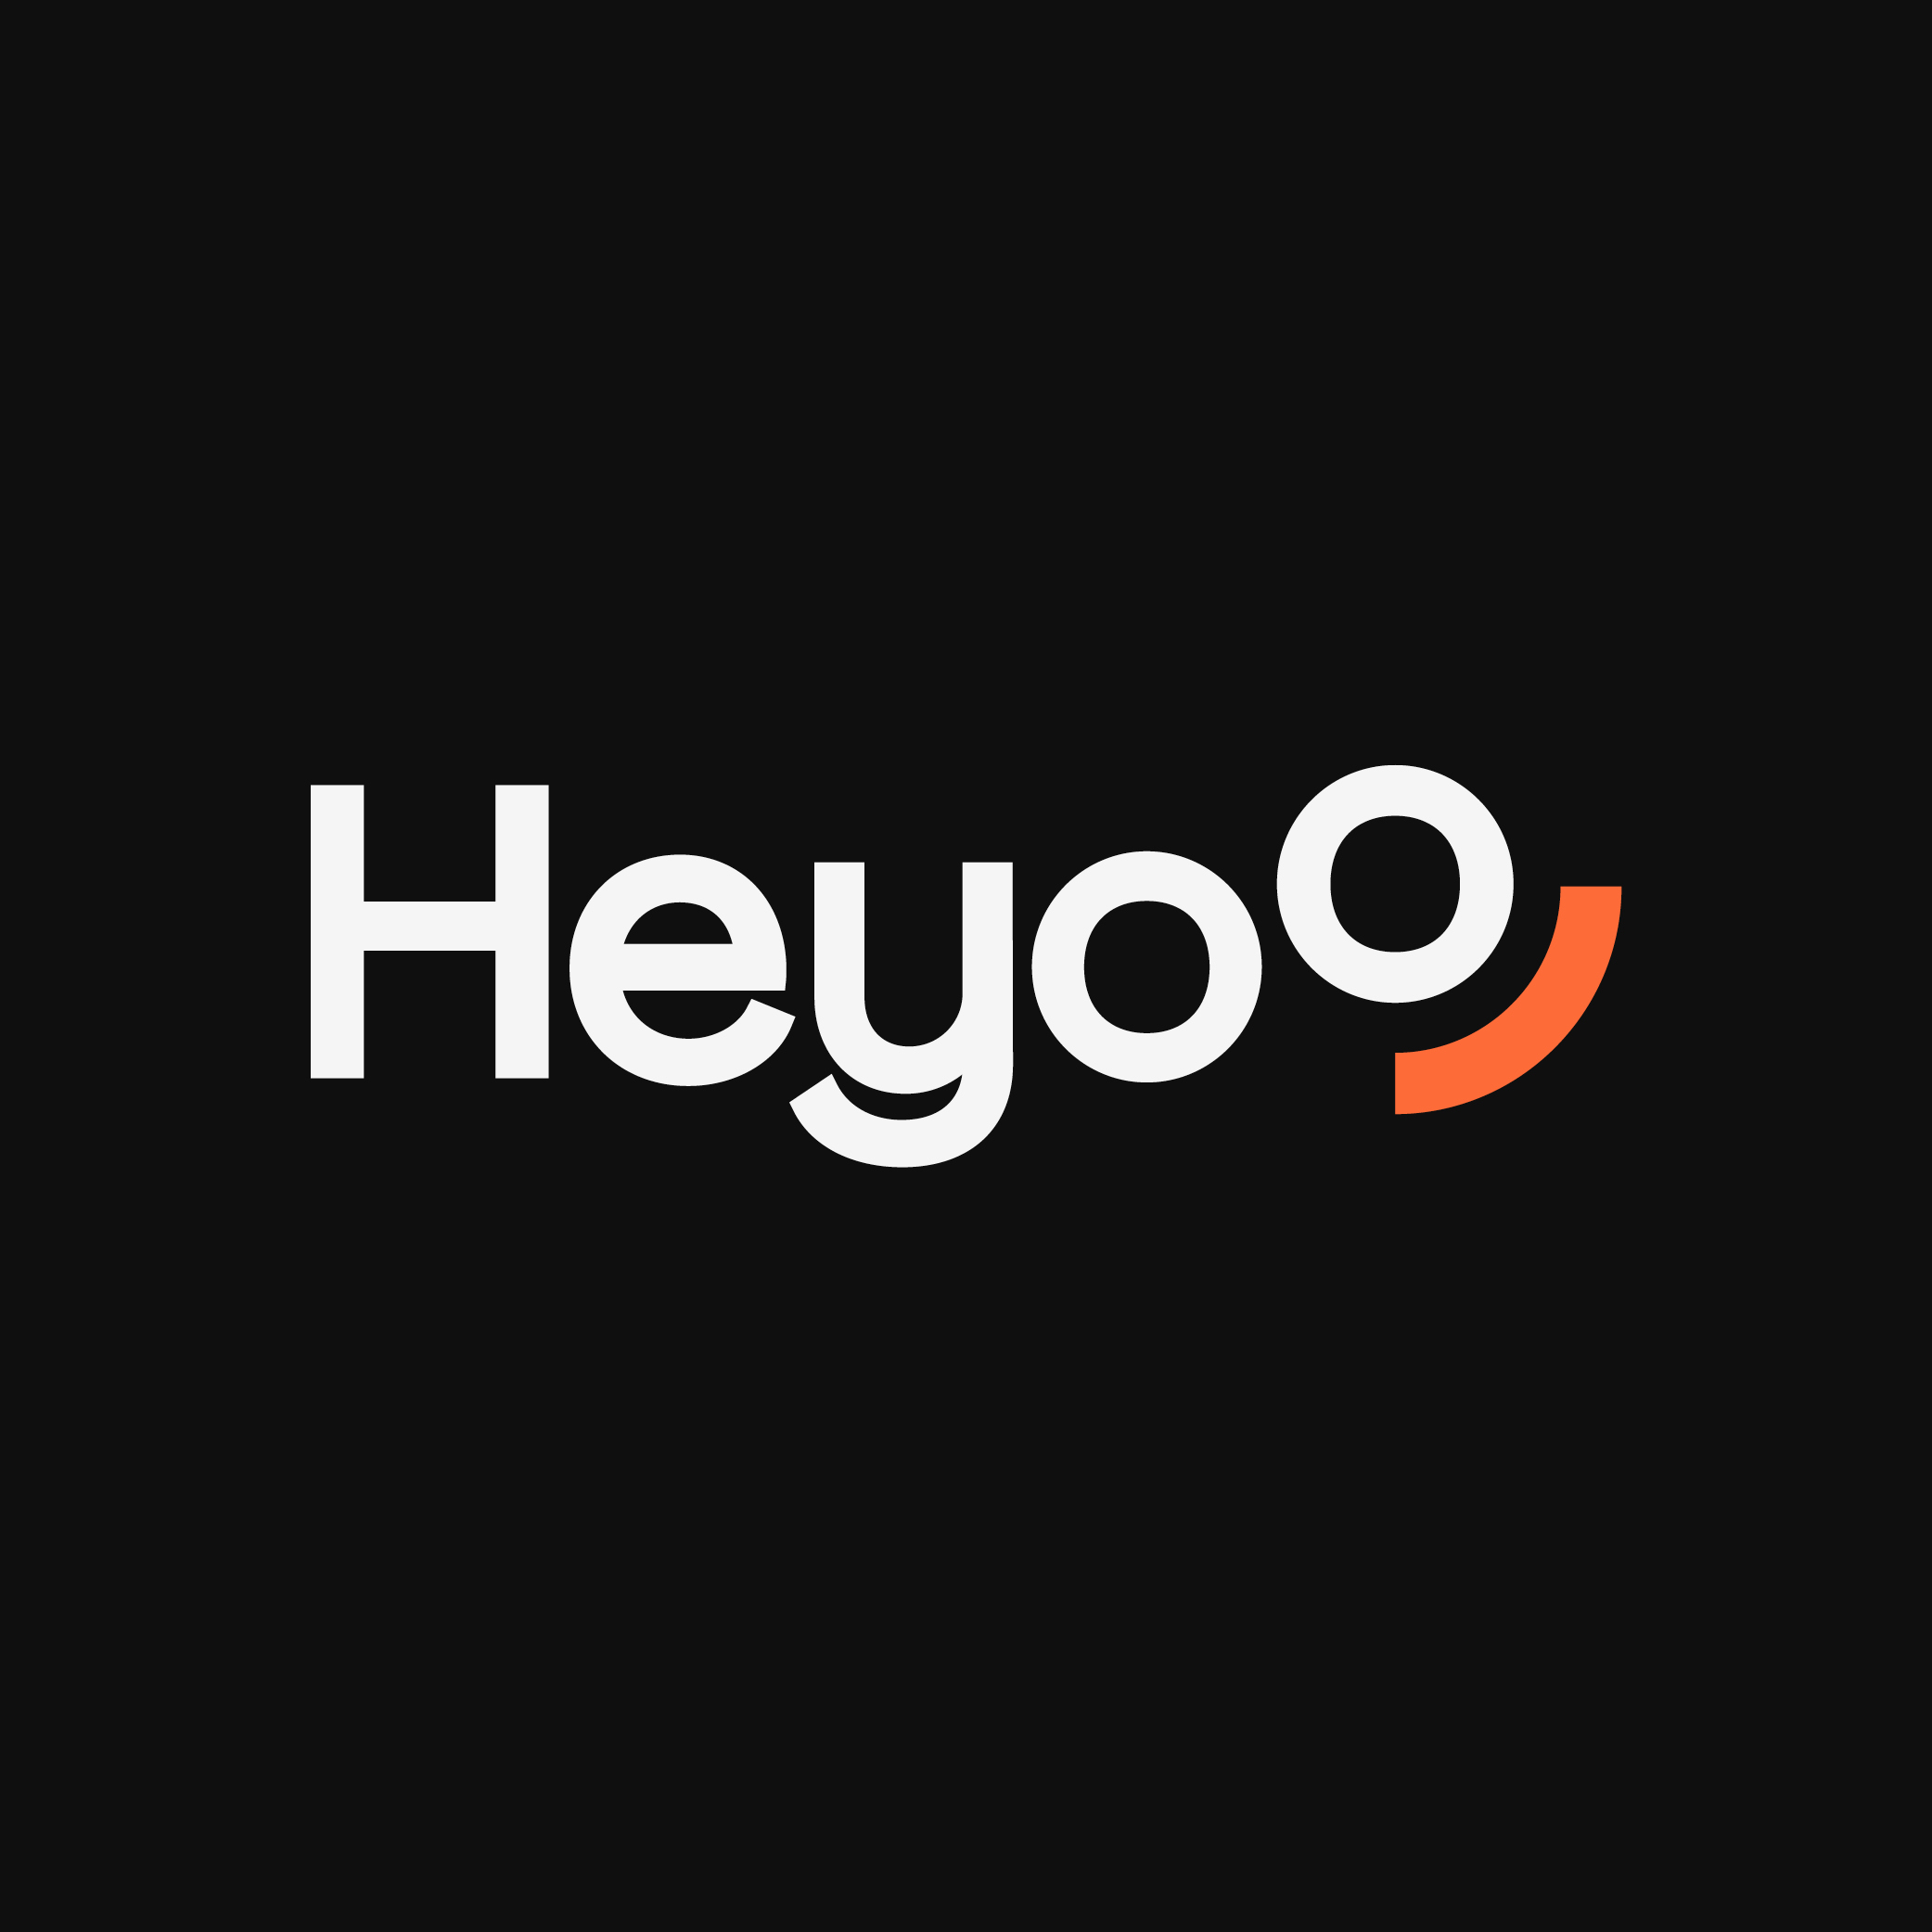 Heyoo Logo